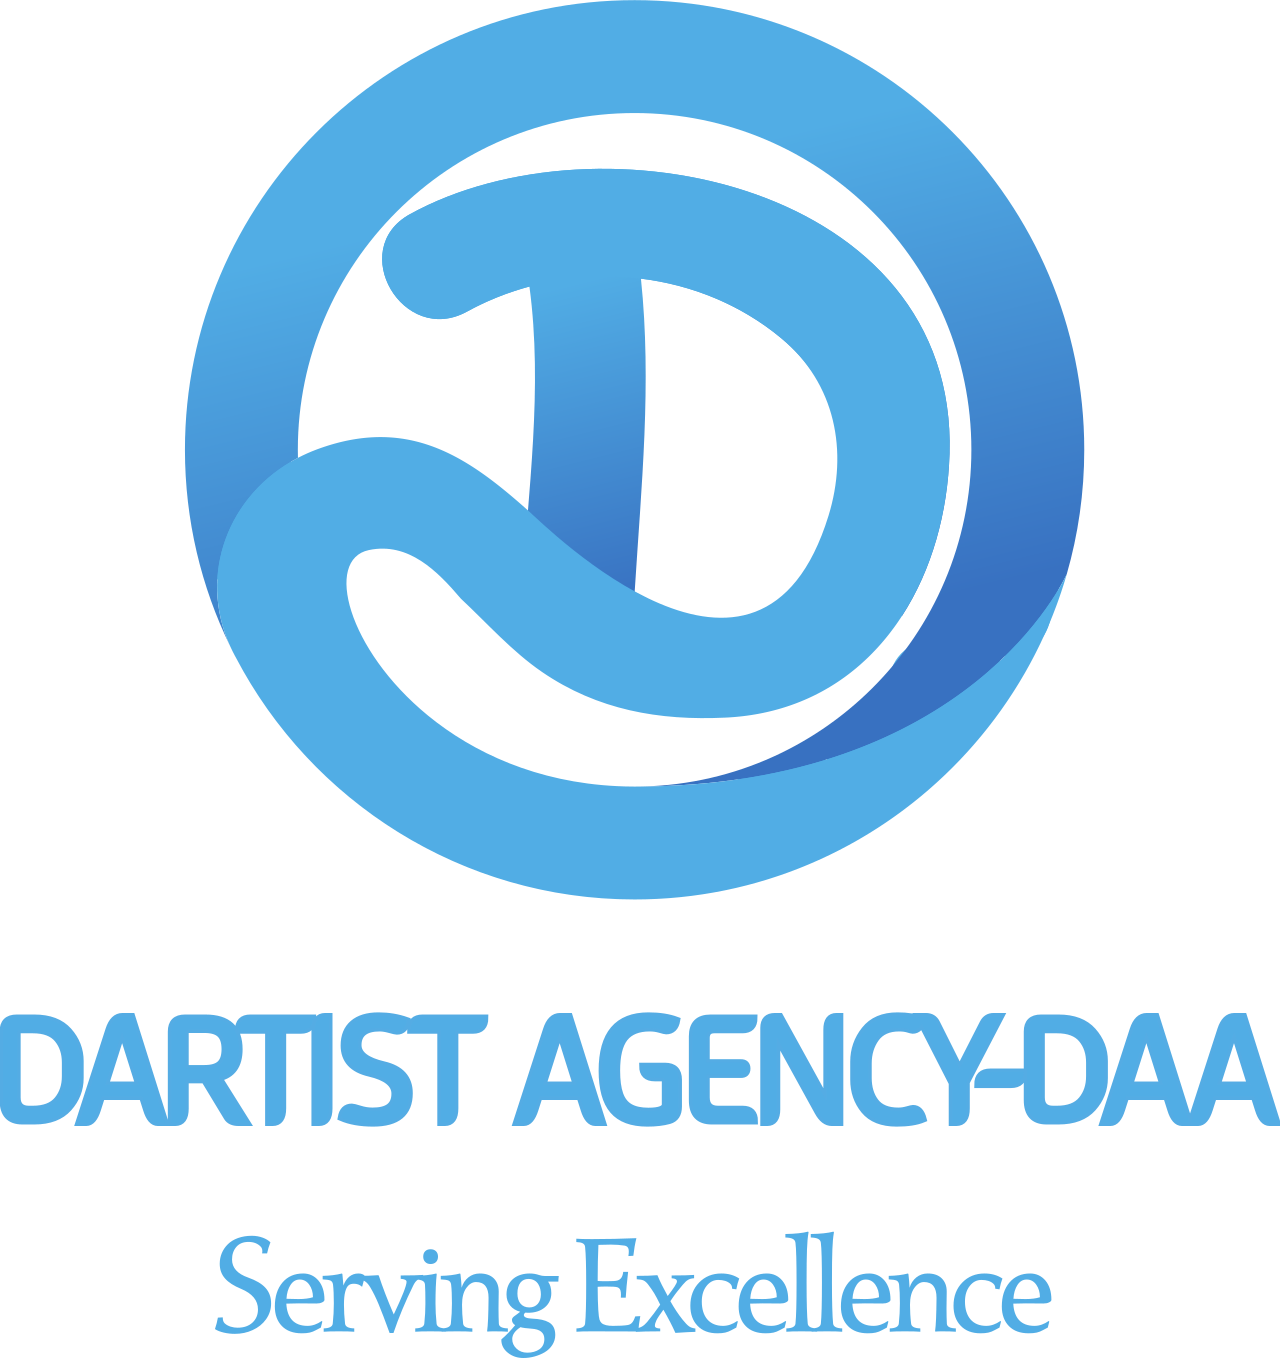 DArtist Agency-DAA's web page